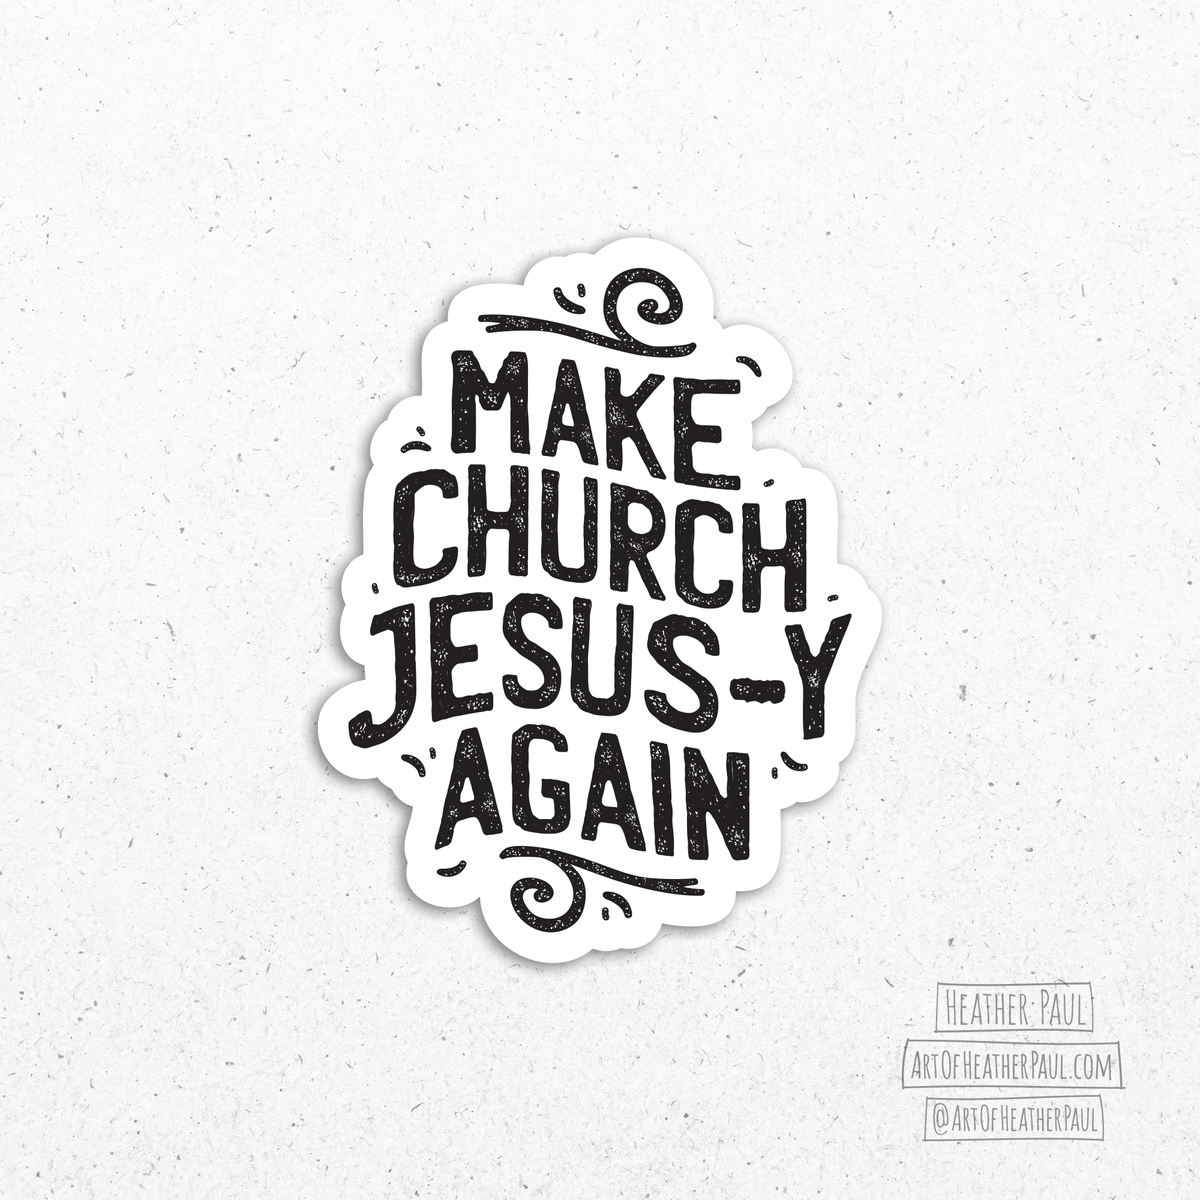 Make Church Jesus-y Again Sticker